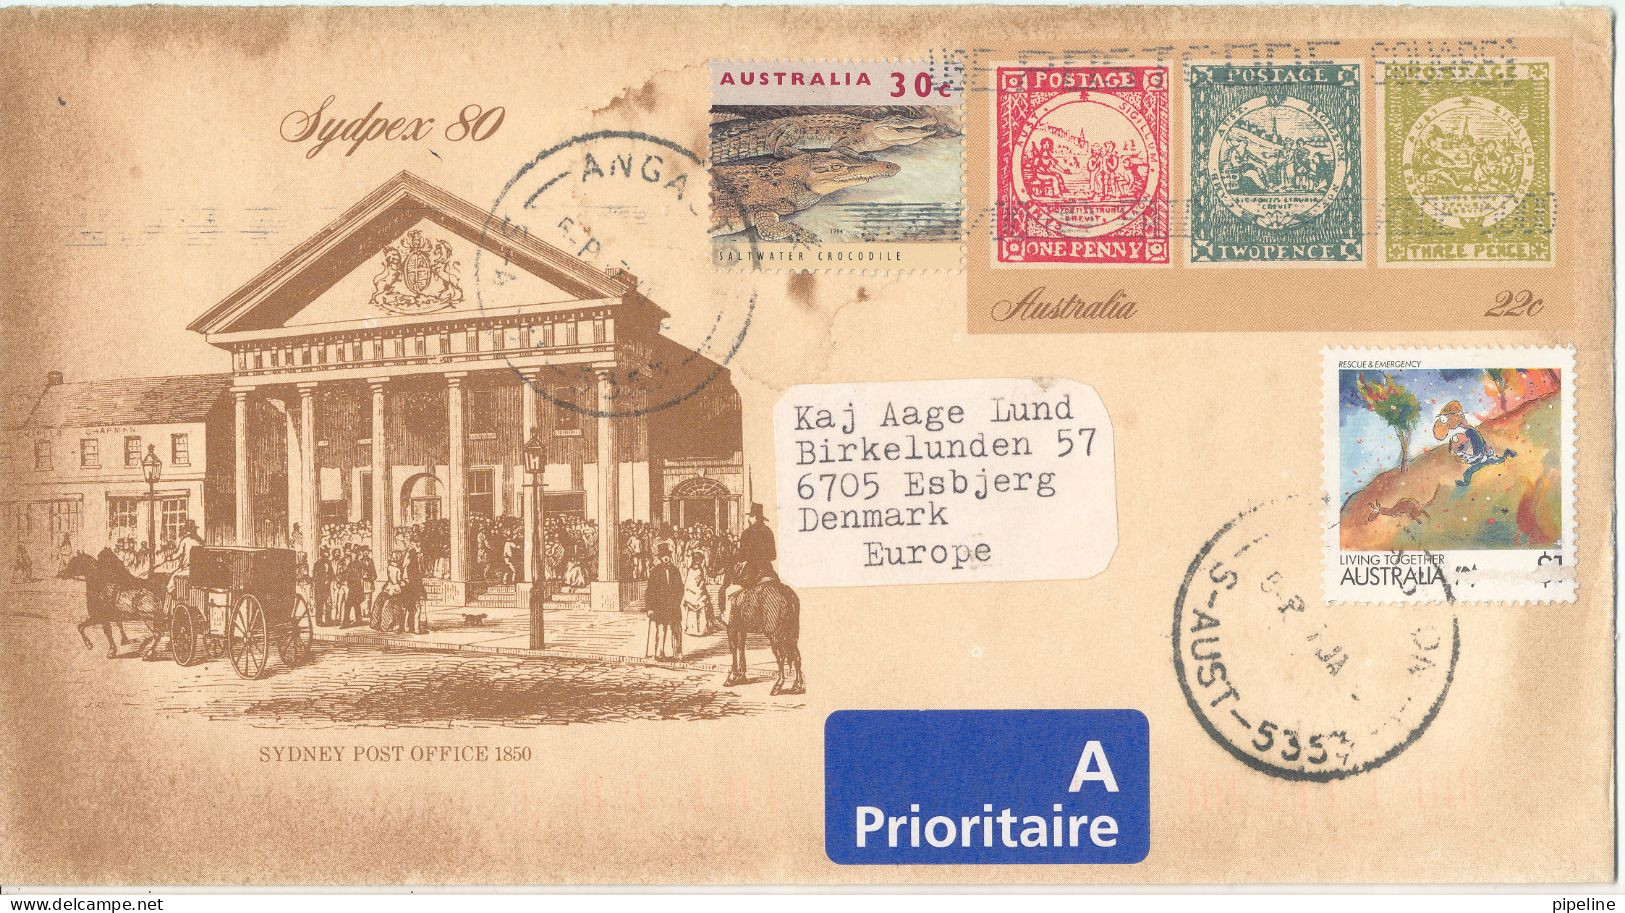 Australia Uprated Postal Stationery Cover SYDPEX 80 Sent To Denmark - Postal Stationery